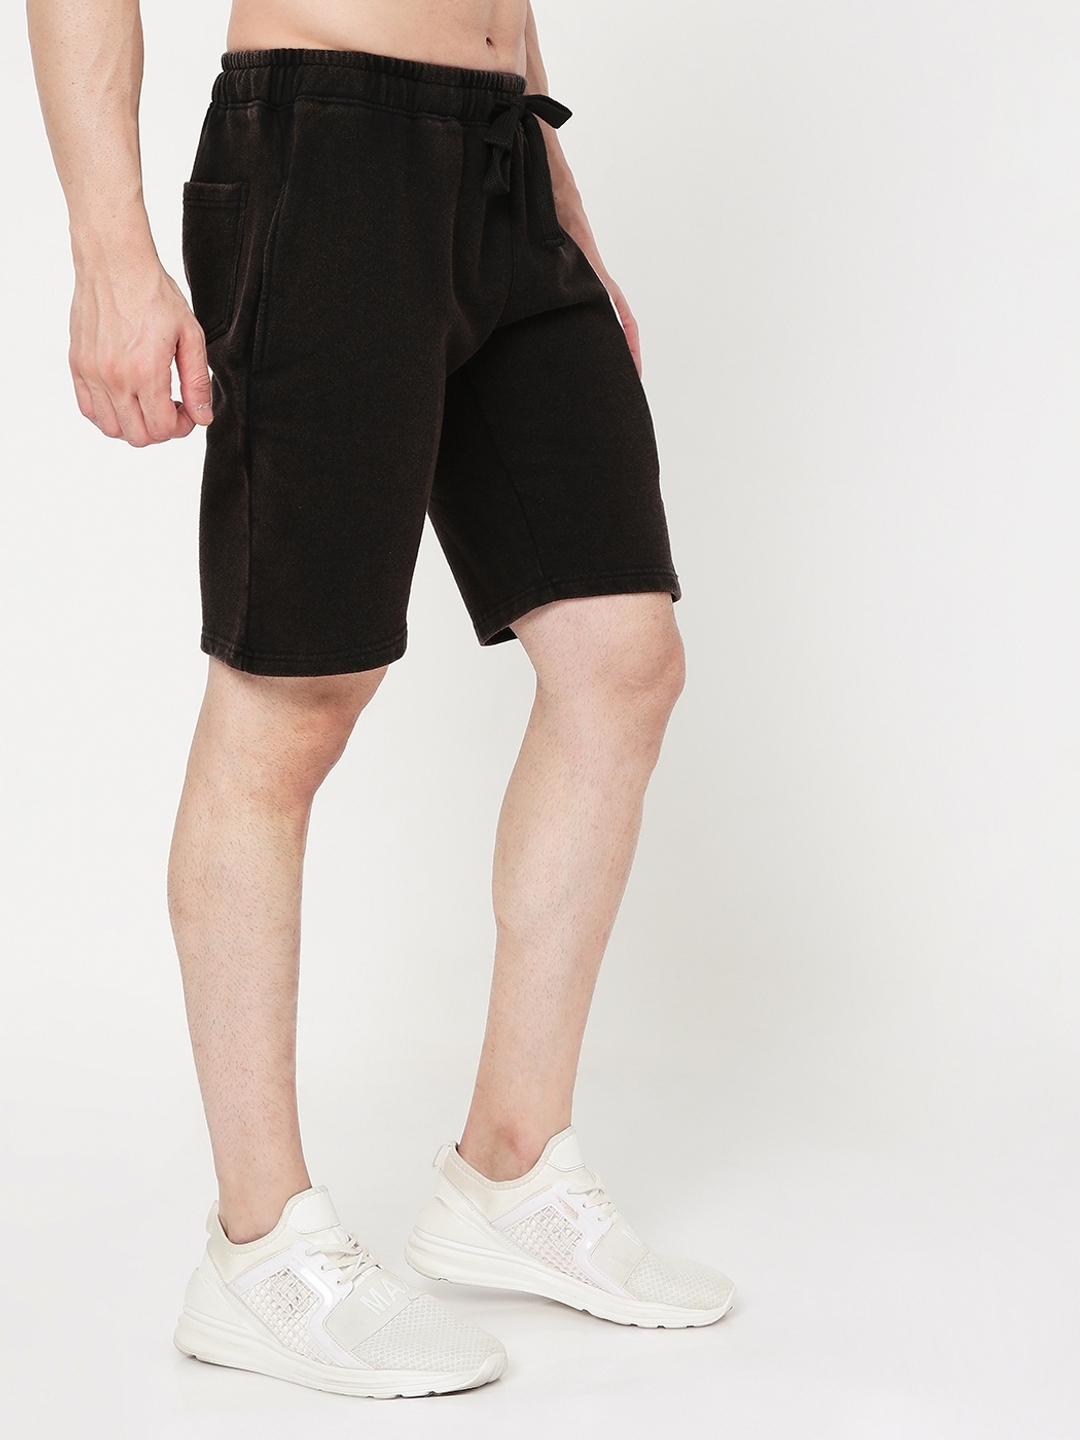 Men's Brand Print Drawstring Shorts with Insert Pockets